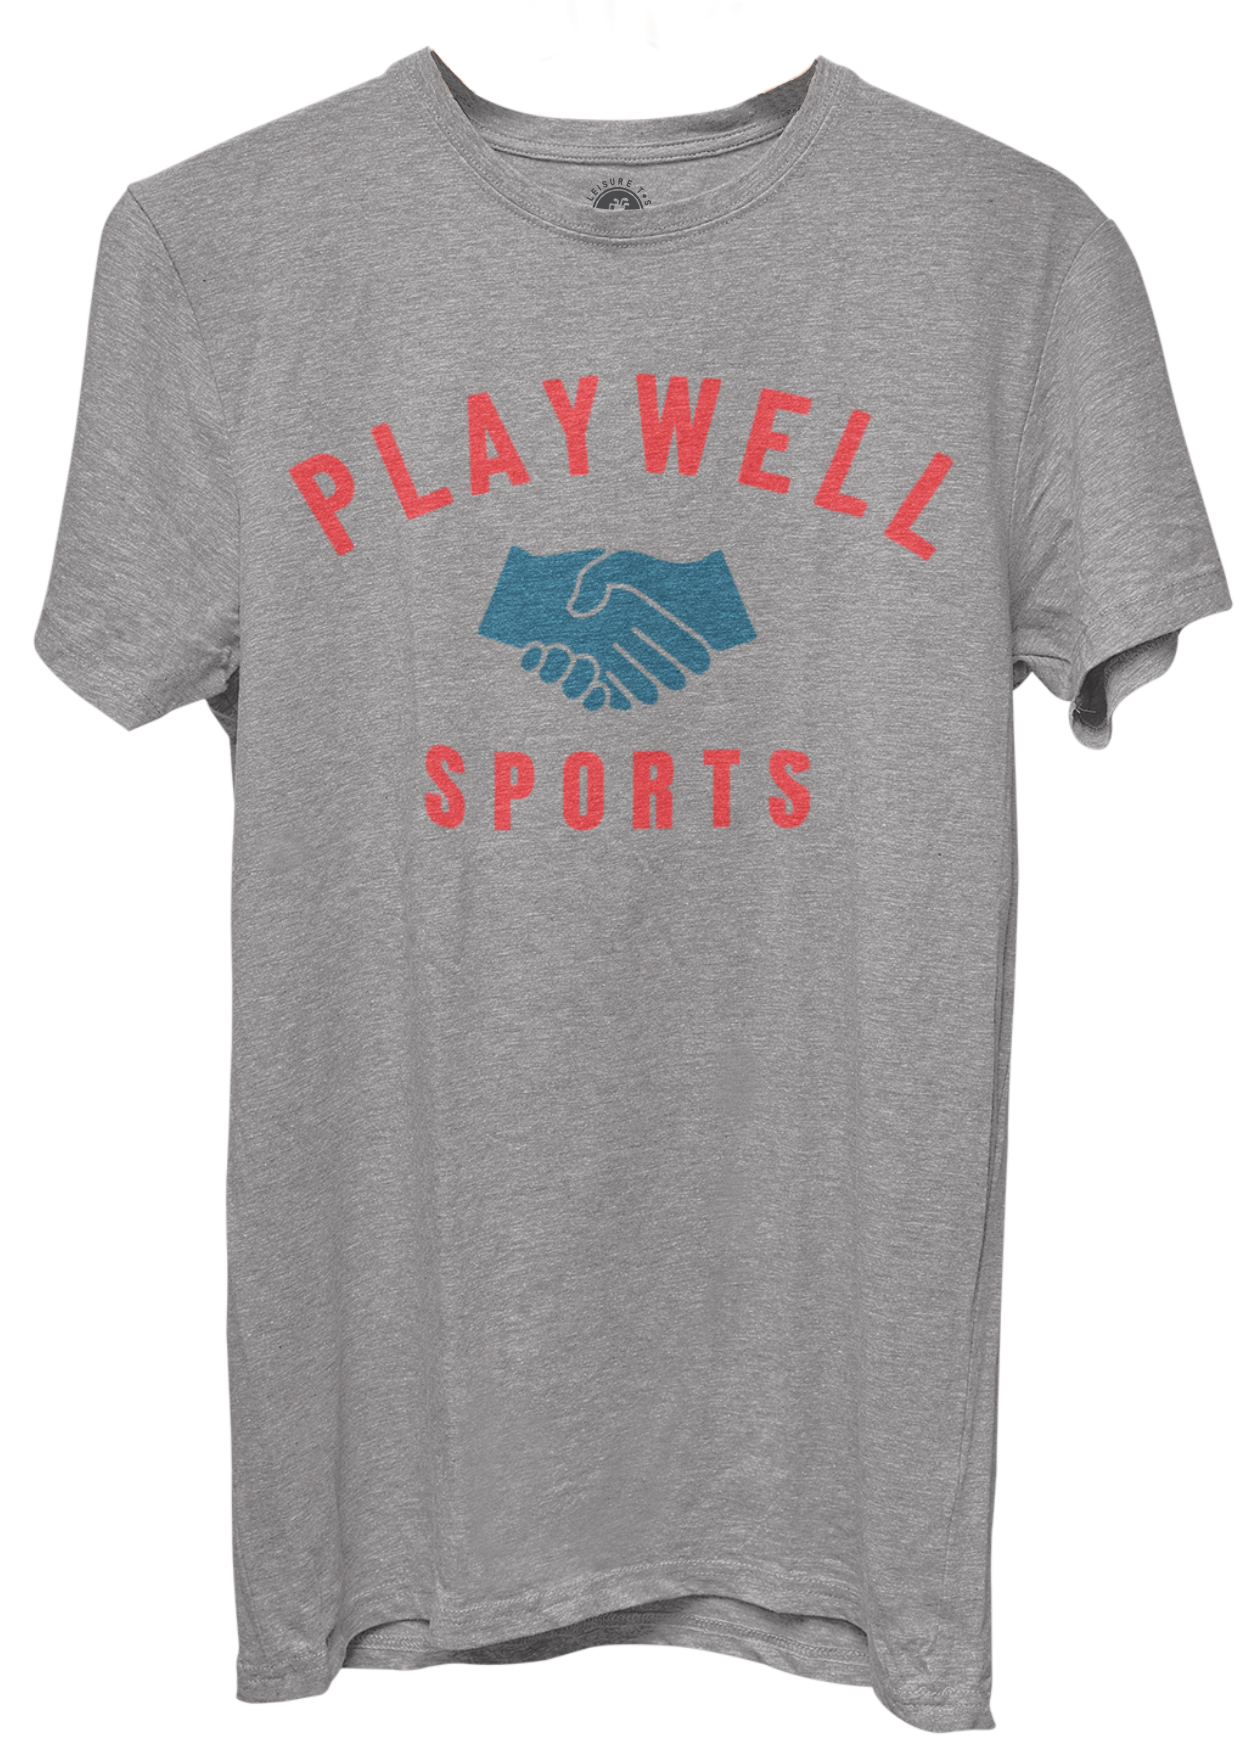 "Playwell Sports"